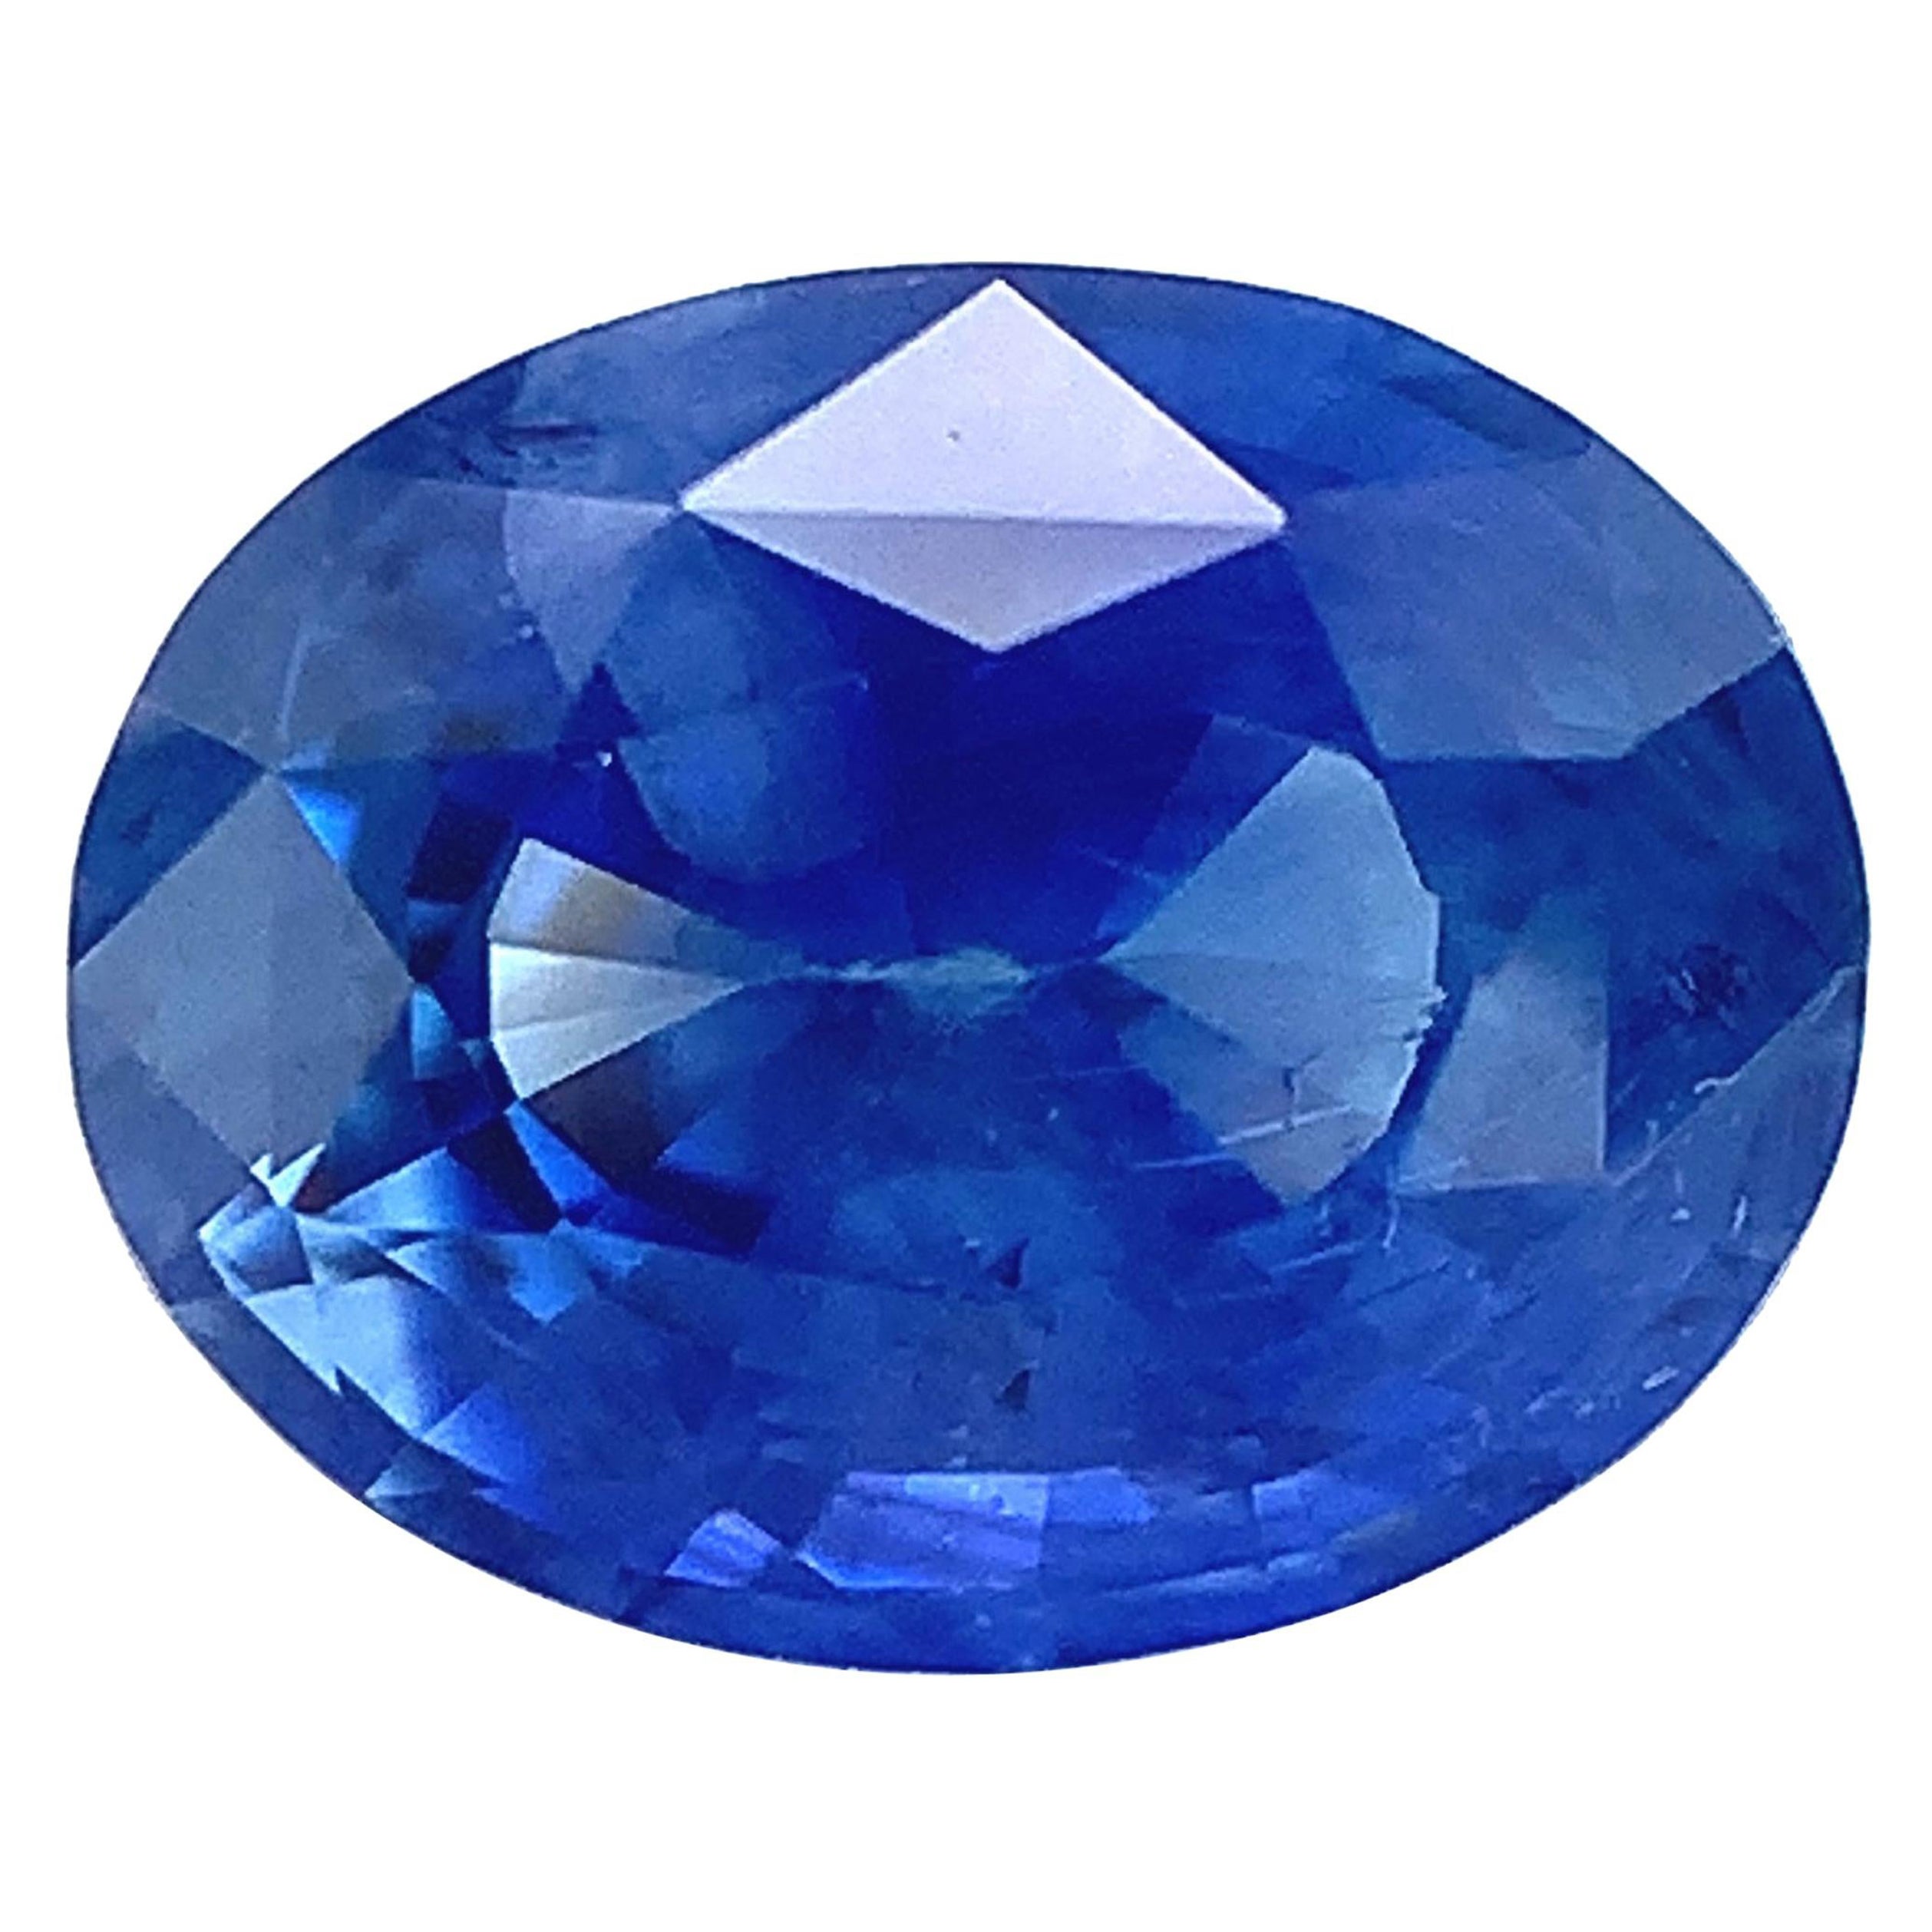 Saphir bleu tournesol de 2,19 carats, pierre précieuse non sertie, certifiée GIA